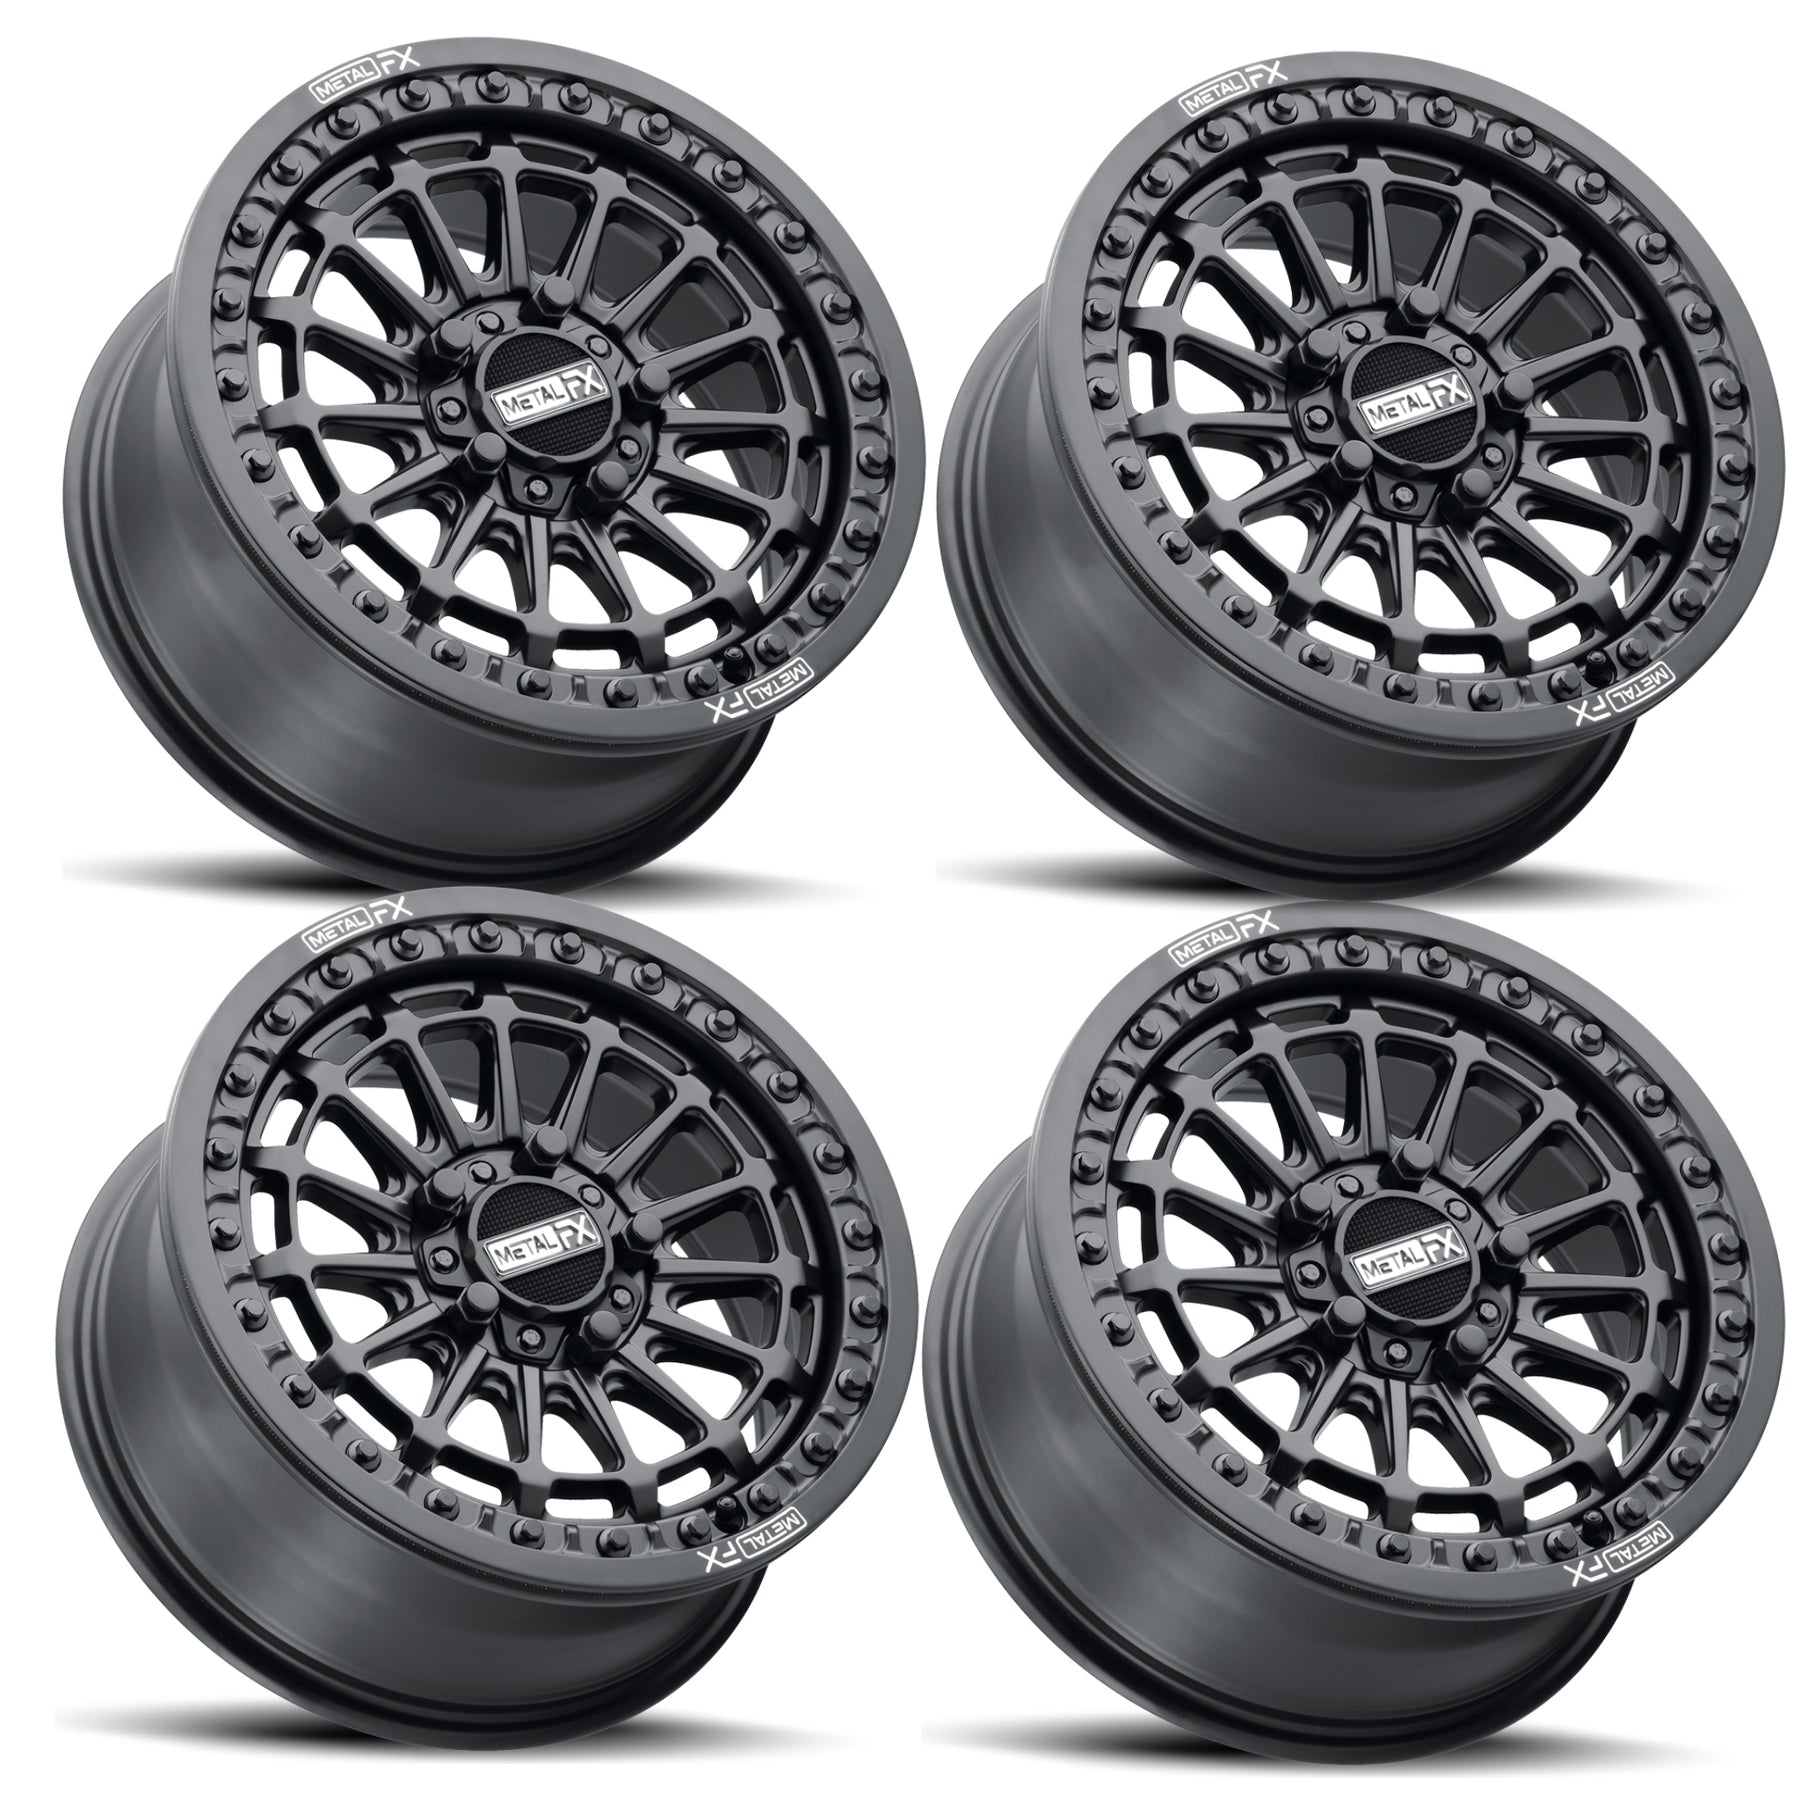 DELTA R BEADLOCK | SATIN BLACK | UTV WHEEL KIT-Wheels-Metal FX Offroad-5x4.5 (5x114.3) | Polaris Pro R / Turbo R / Xpedition-Street Aggressive - 15x10 (5+5) - (All 4)-No Spare-Black Market UTV